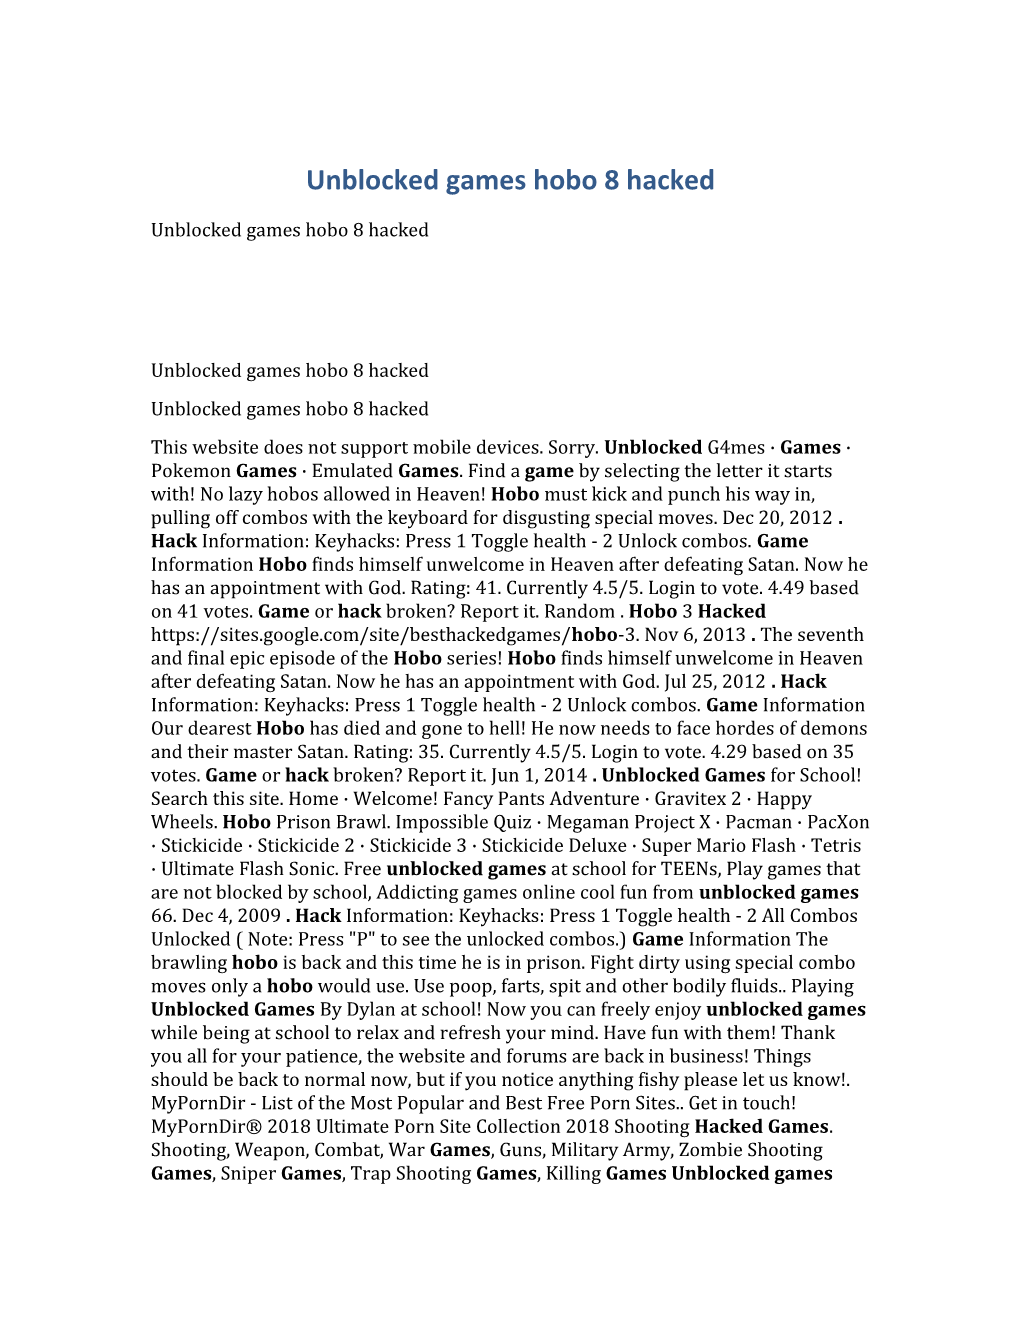 Unblocked Games Hobo 8 Hacked